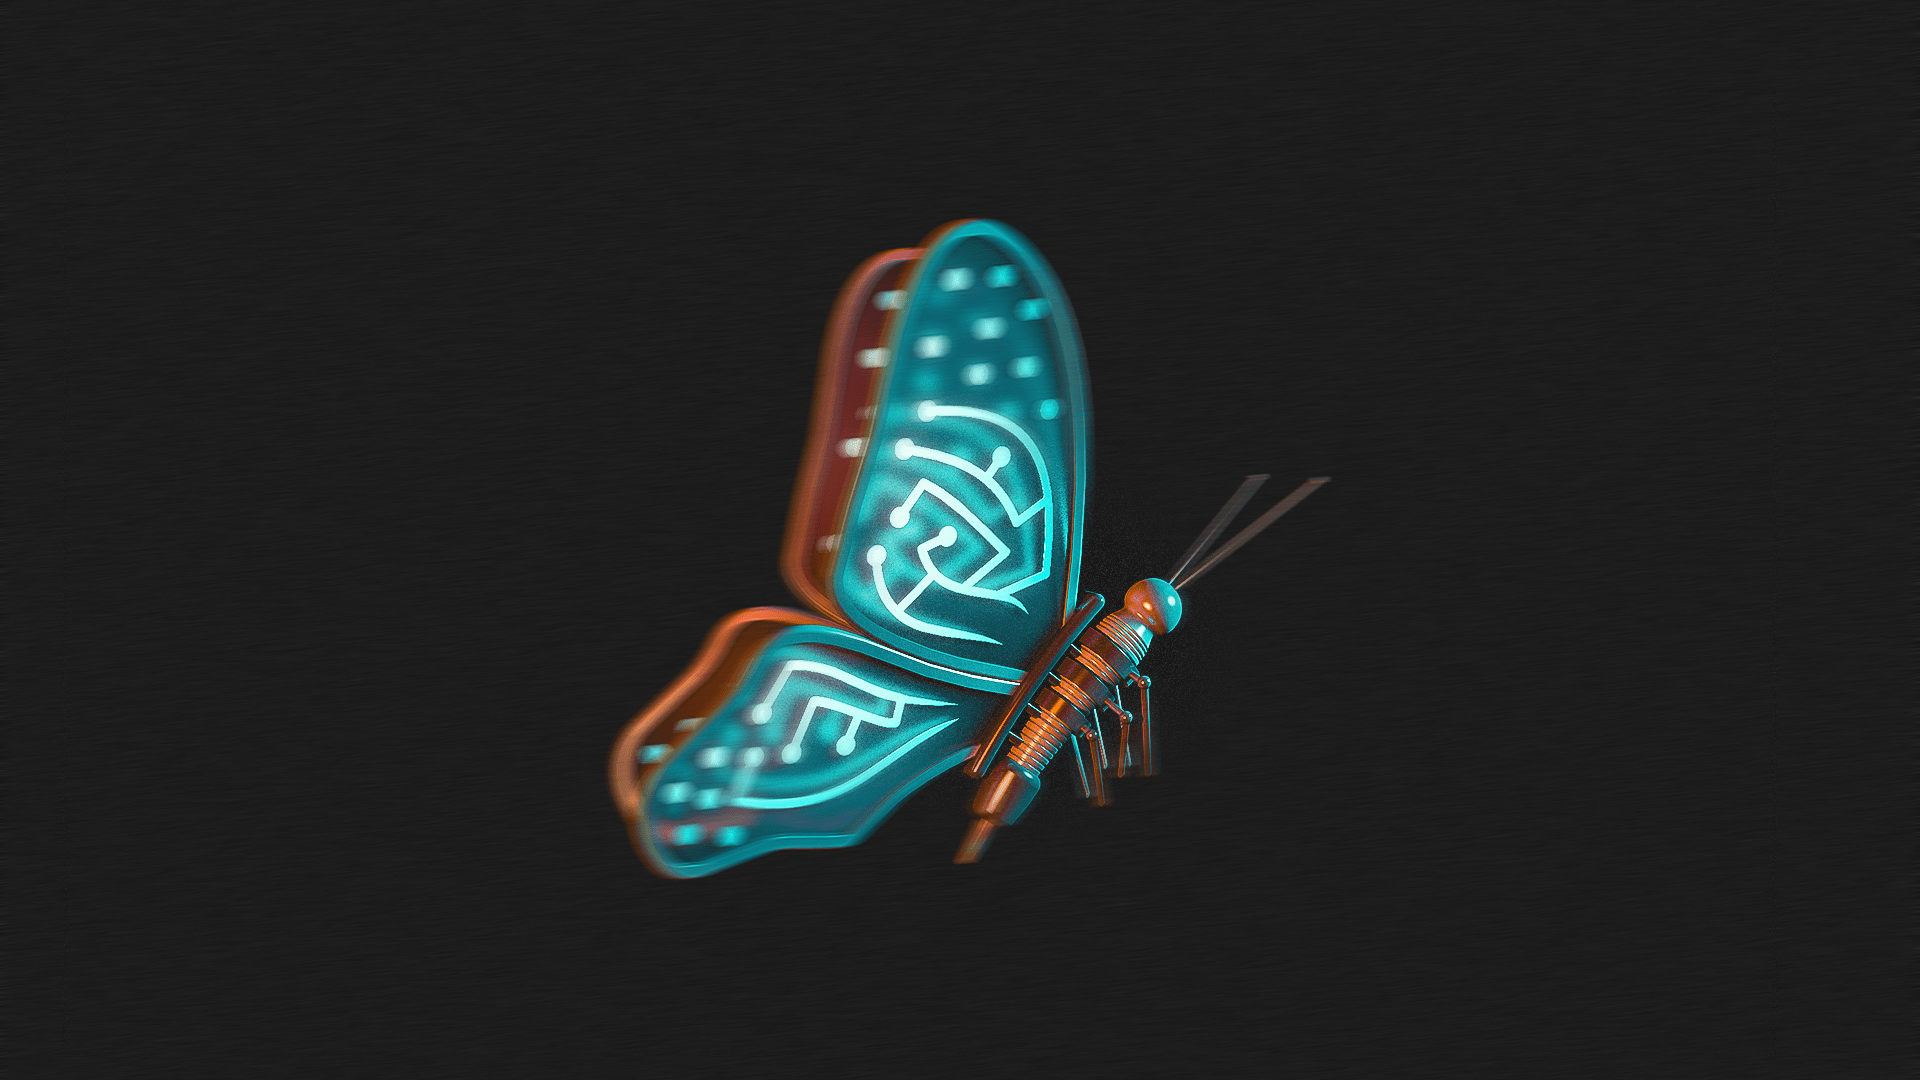 Bionic Butterfly 2.0 by nikolae